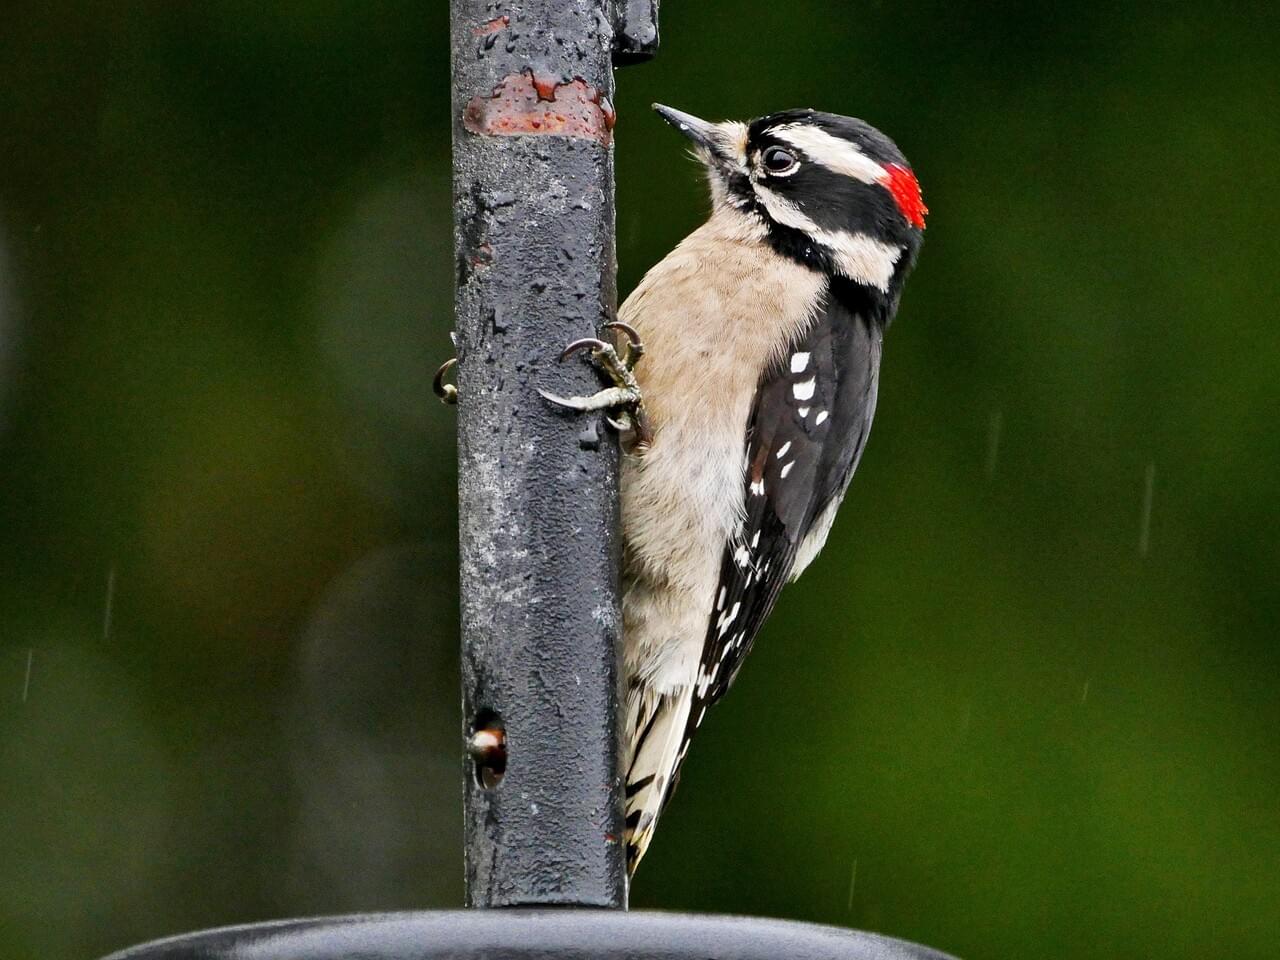 Downy woodpeckers